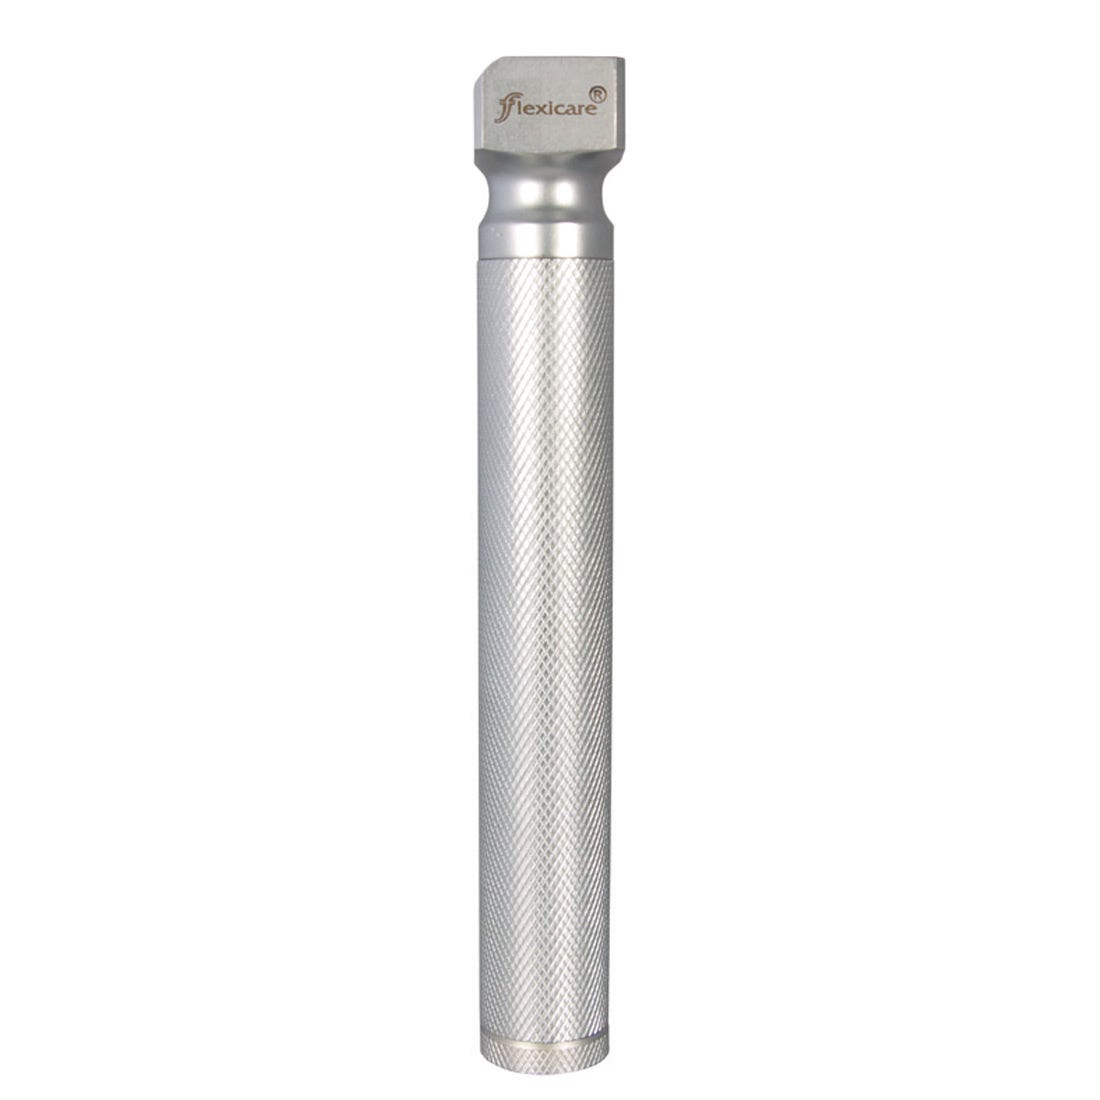 Flexicare Standard Laryngoscope Handles - Small/Penlight